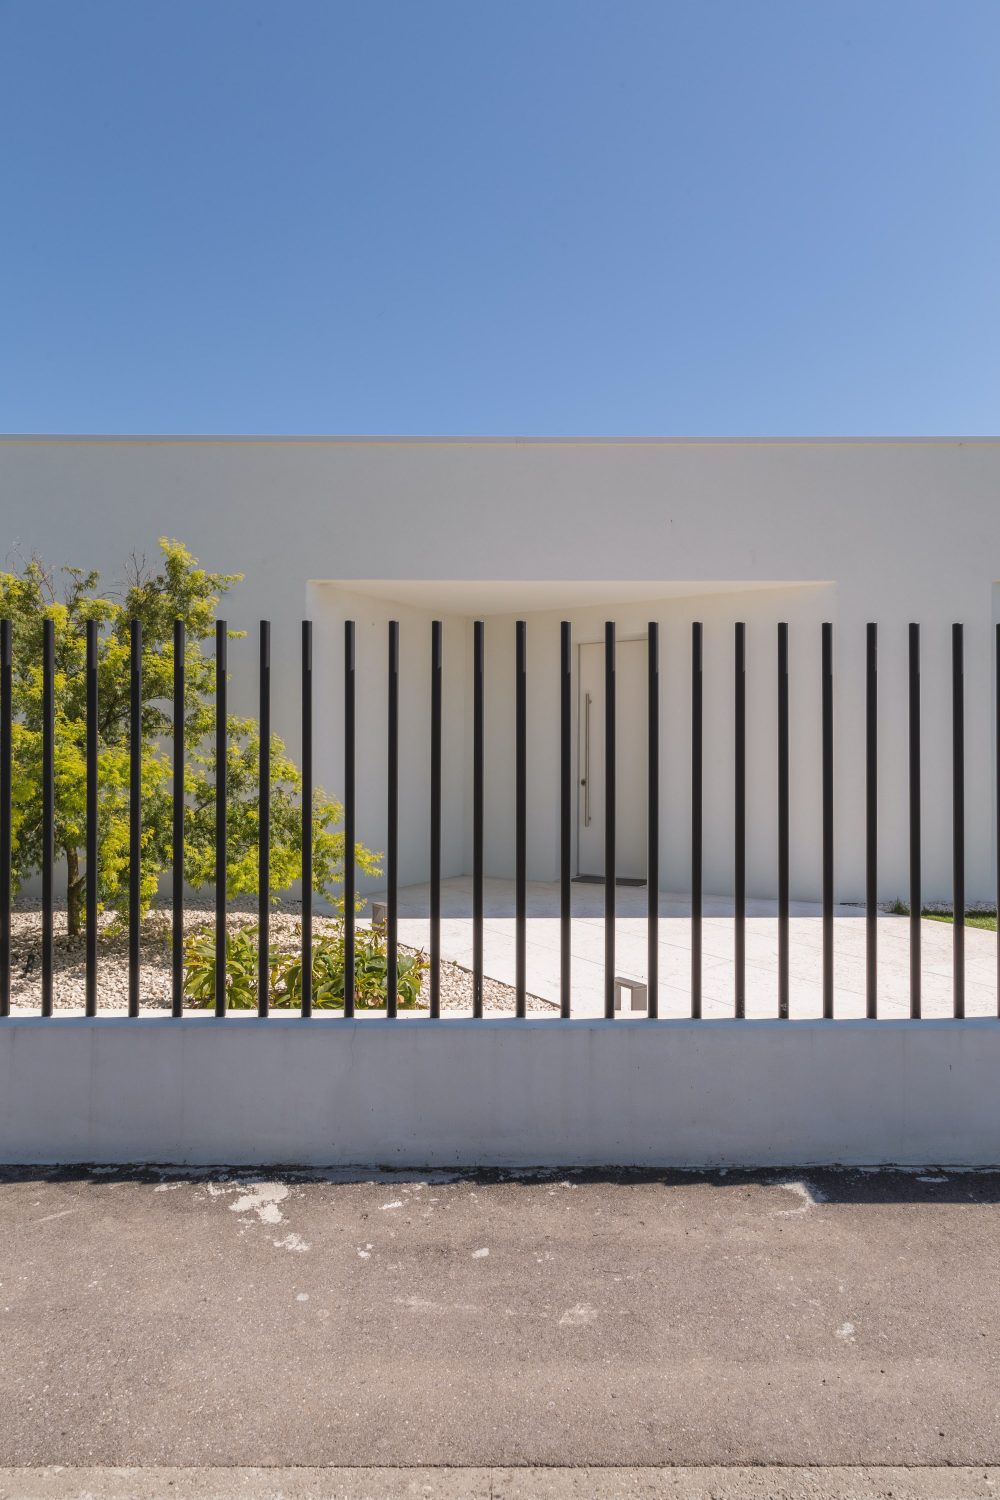 Casa Ora by ZDA | Zupelli Design Architettura